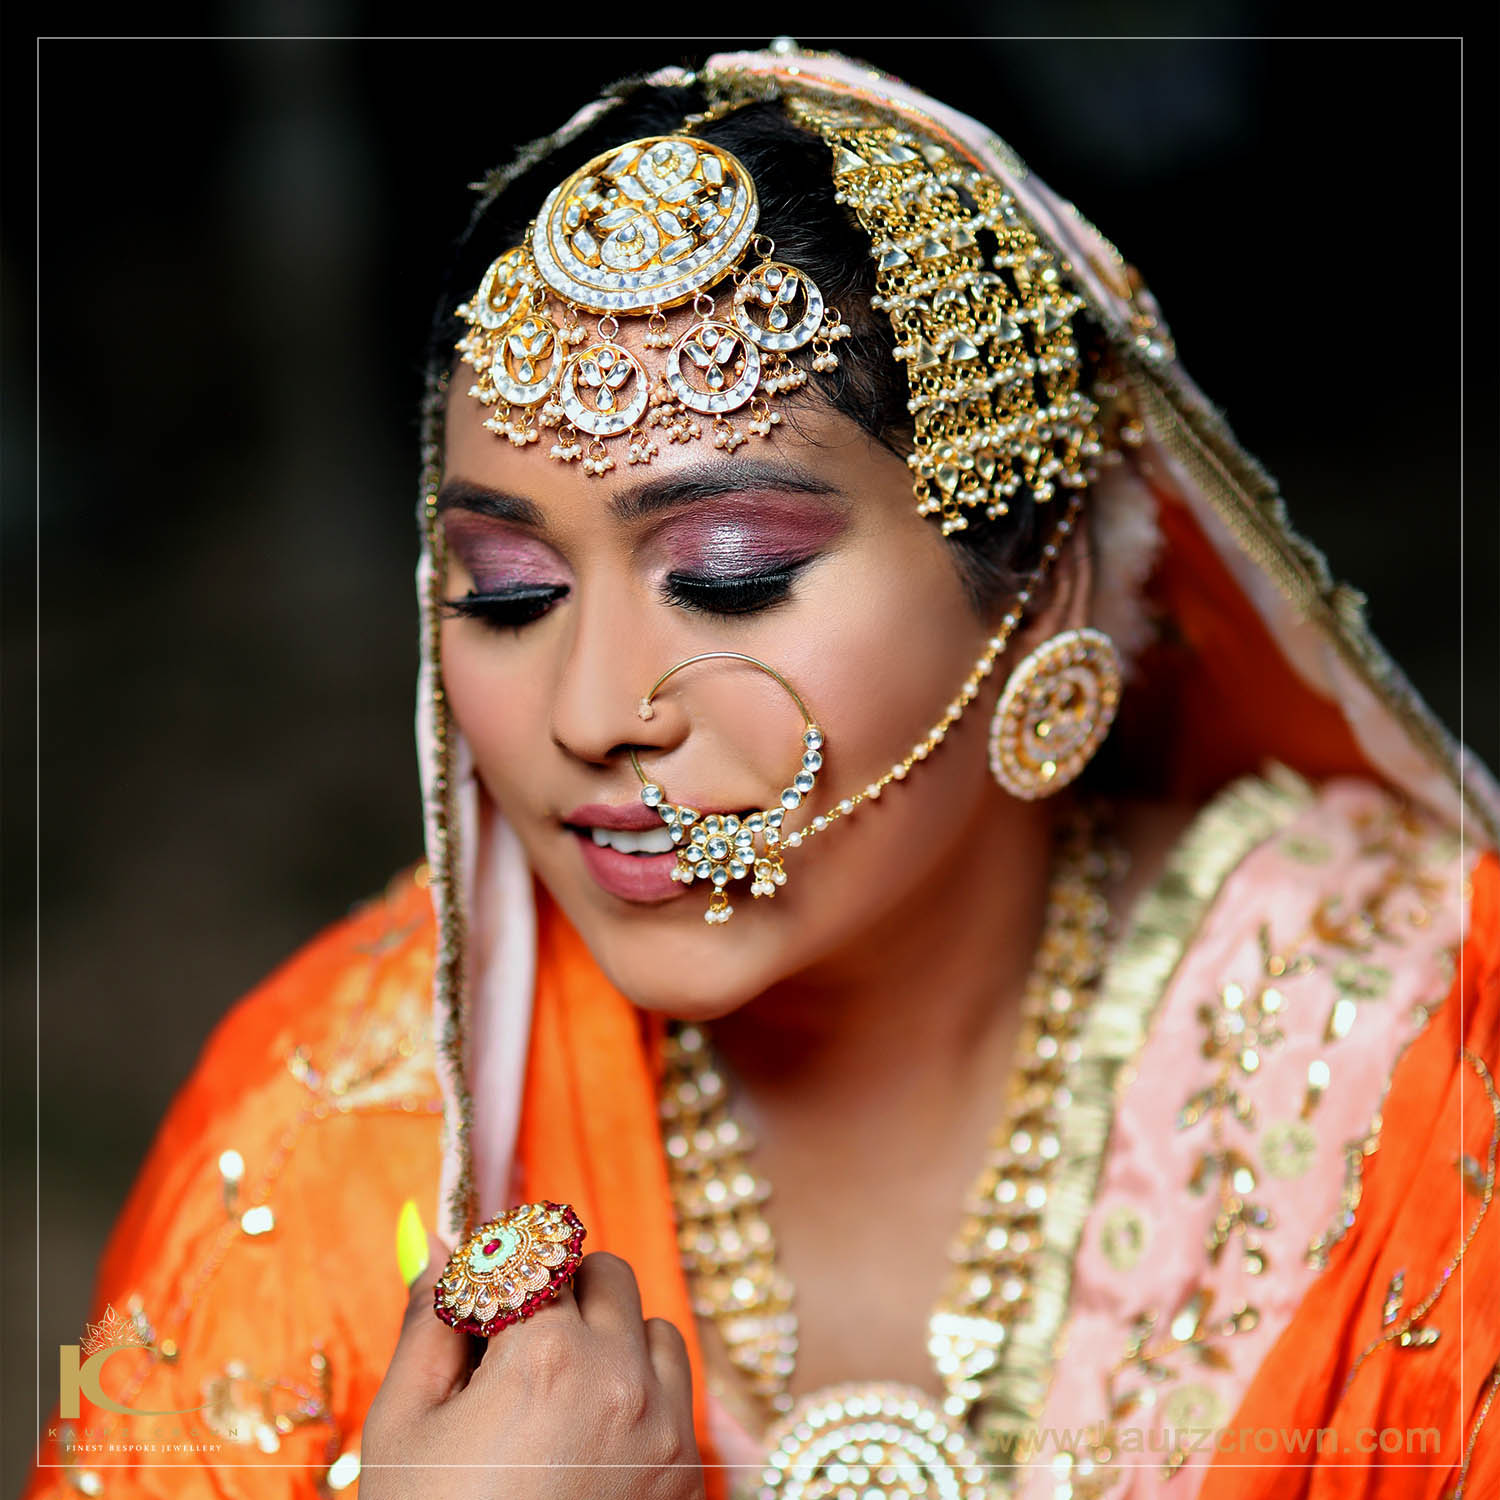 Pin by Roshan kumar on Bengali wedding culture | Nose ring, Septum ring,  Bengali wedding